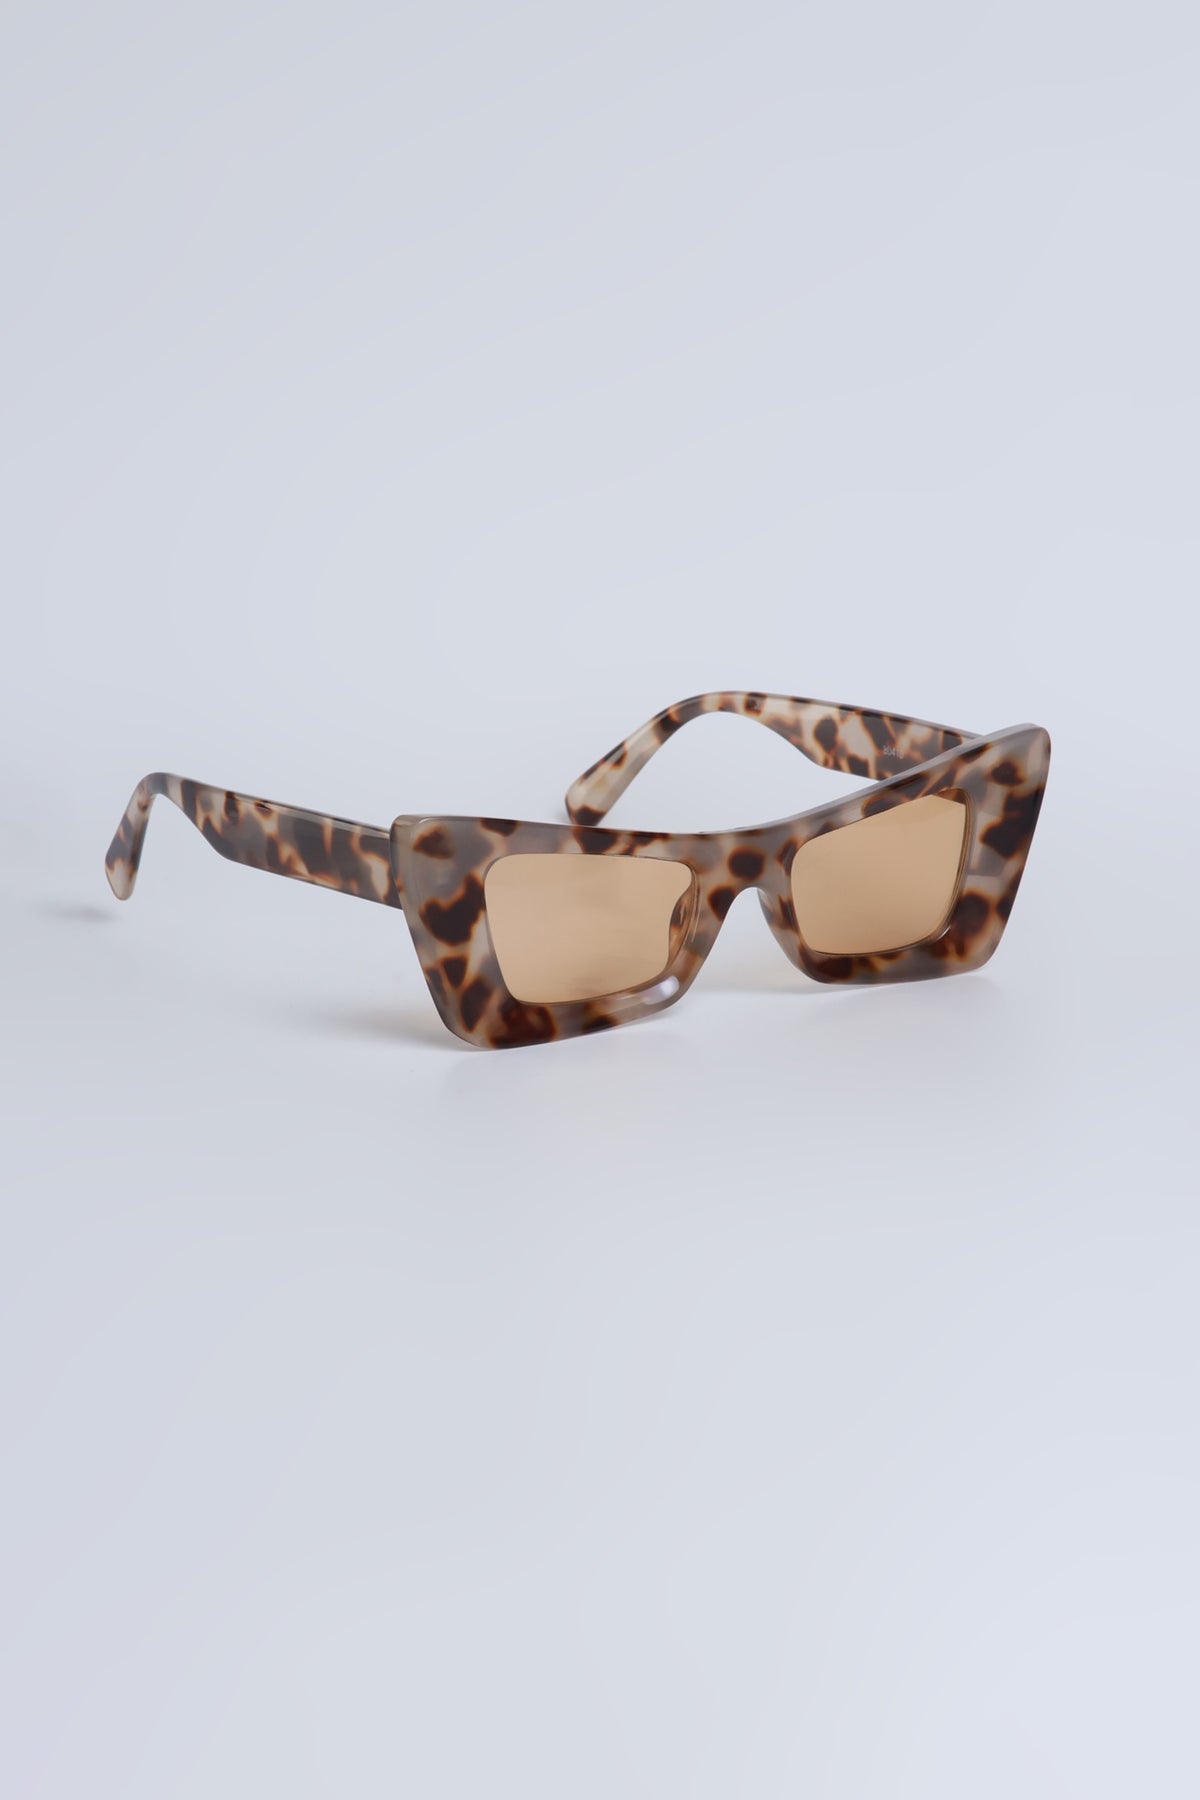 
              Right Direction Triangular Sunglasses - Brown/Grey Print - Swank A Posh
            